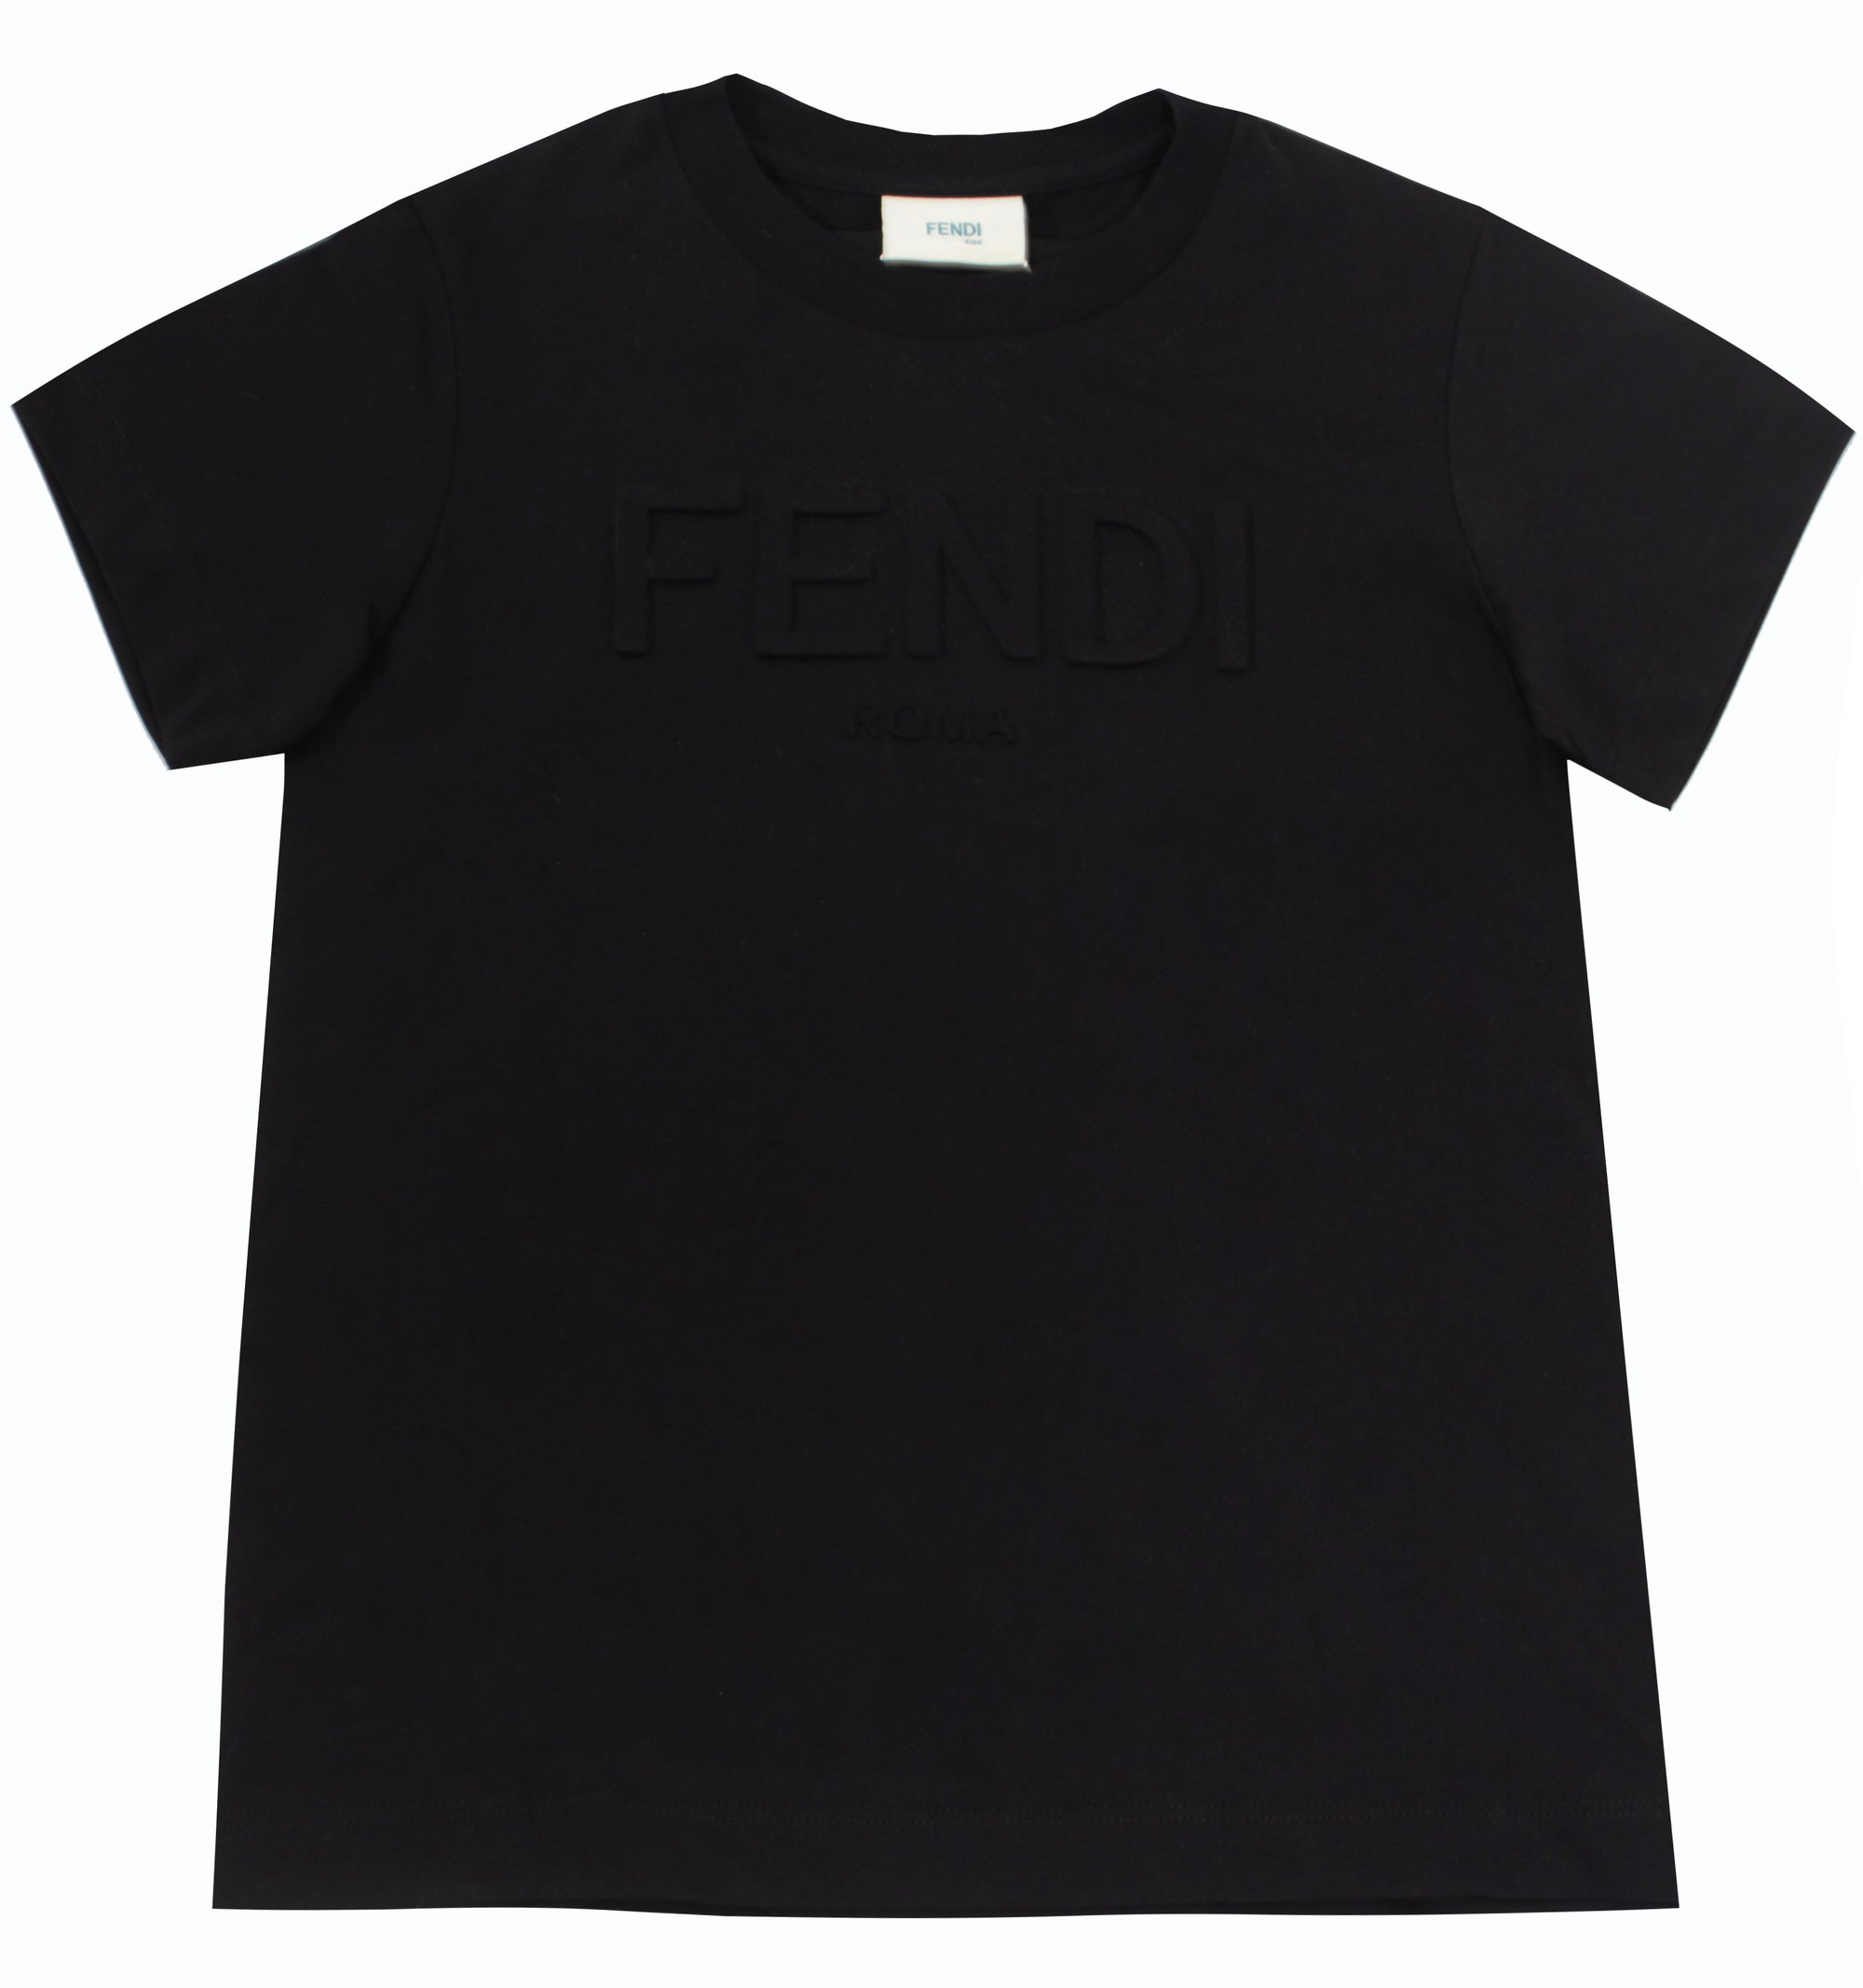 SS Tee with Fendi Text Logo - Black